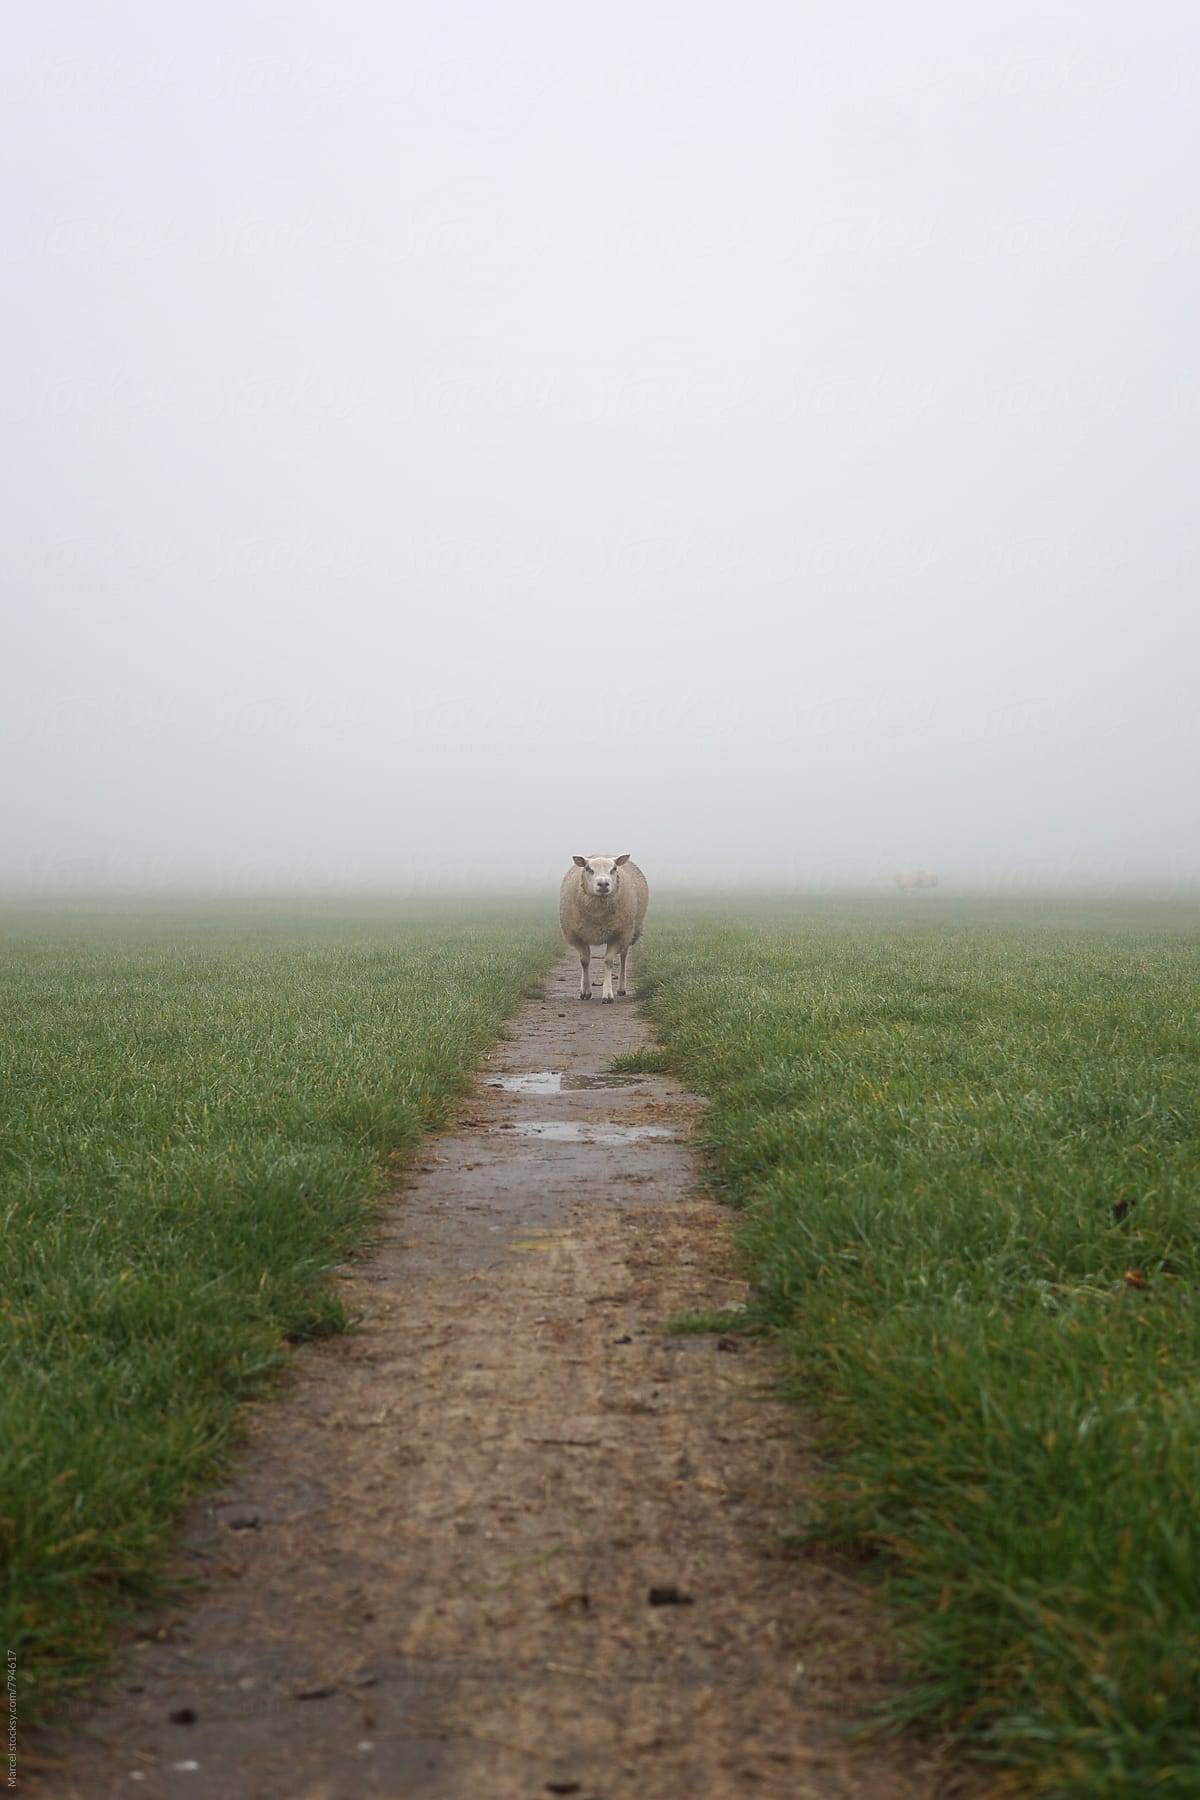 Sheep on path in foggy field